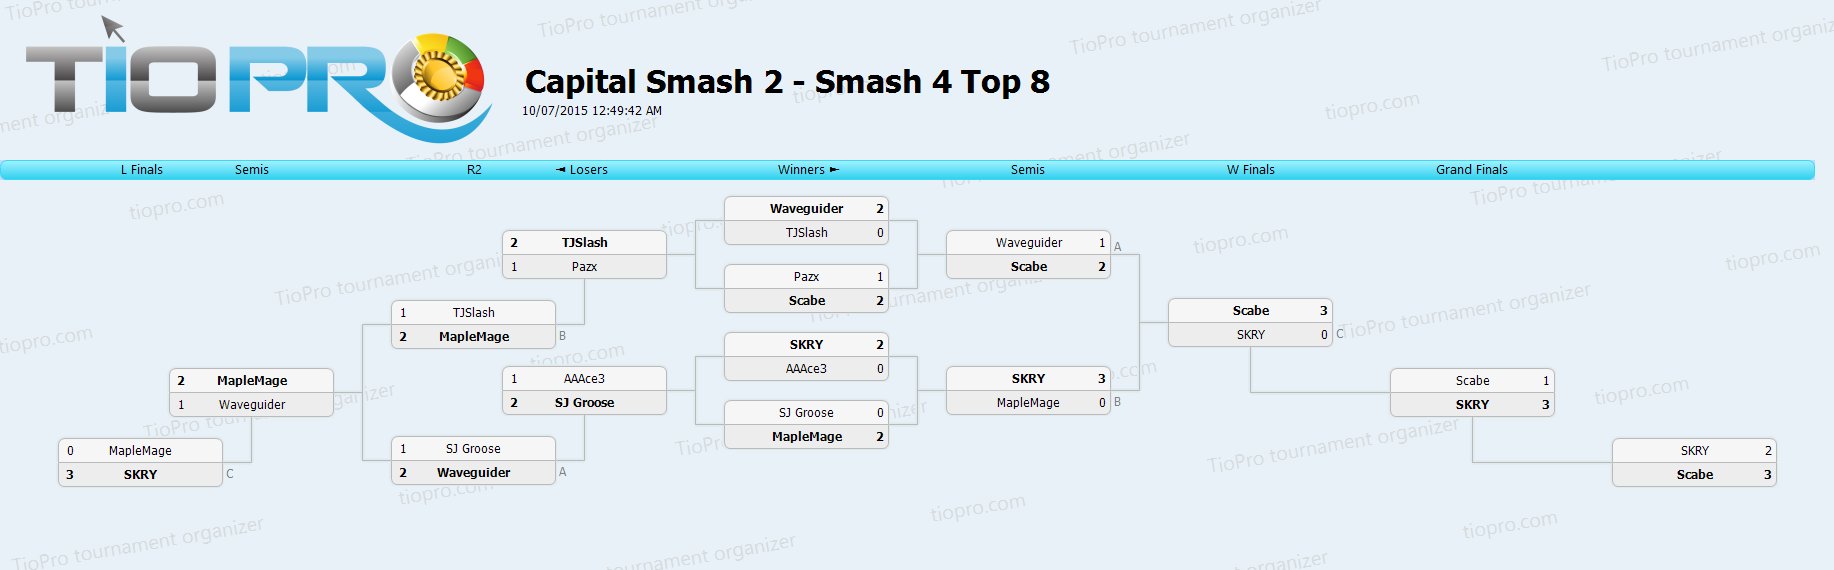 Capital Smash 2 - Smash for Wii U Pro Bracket